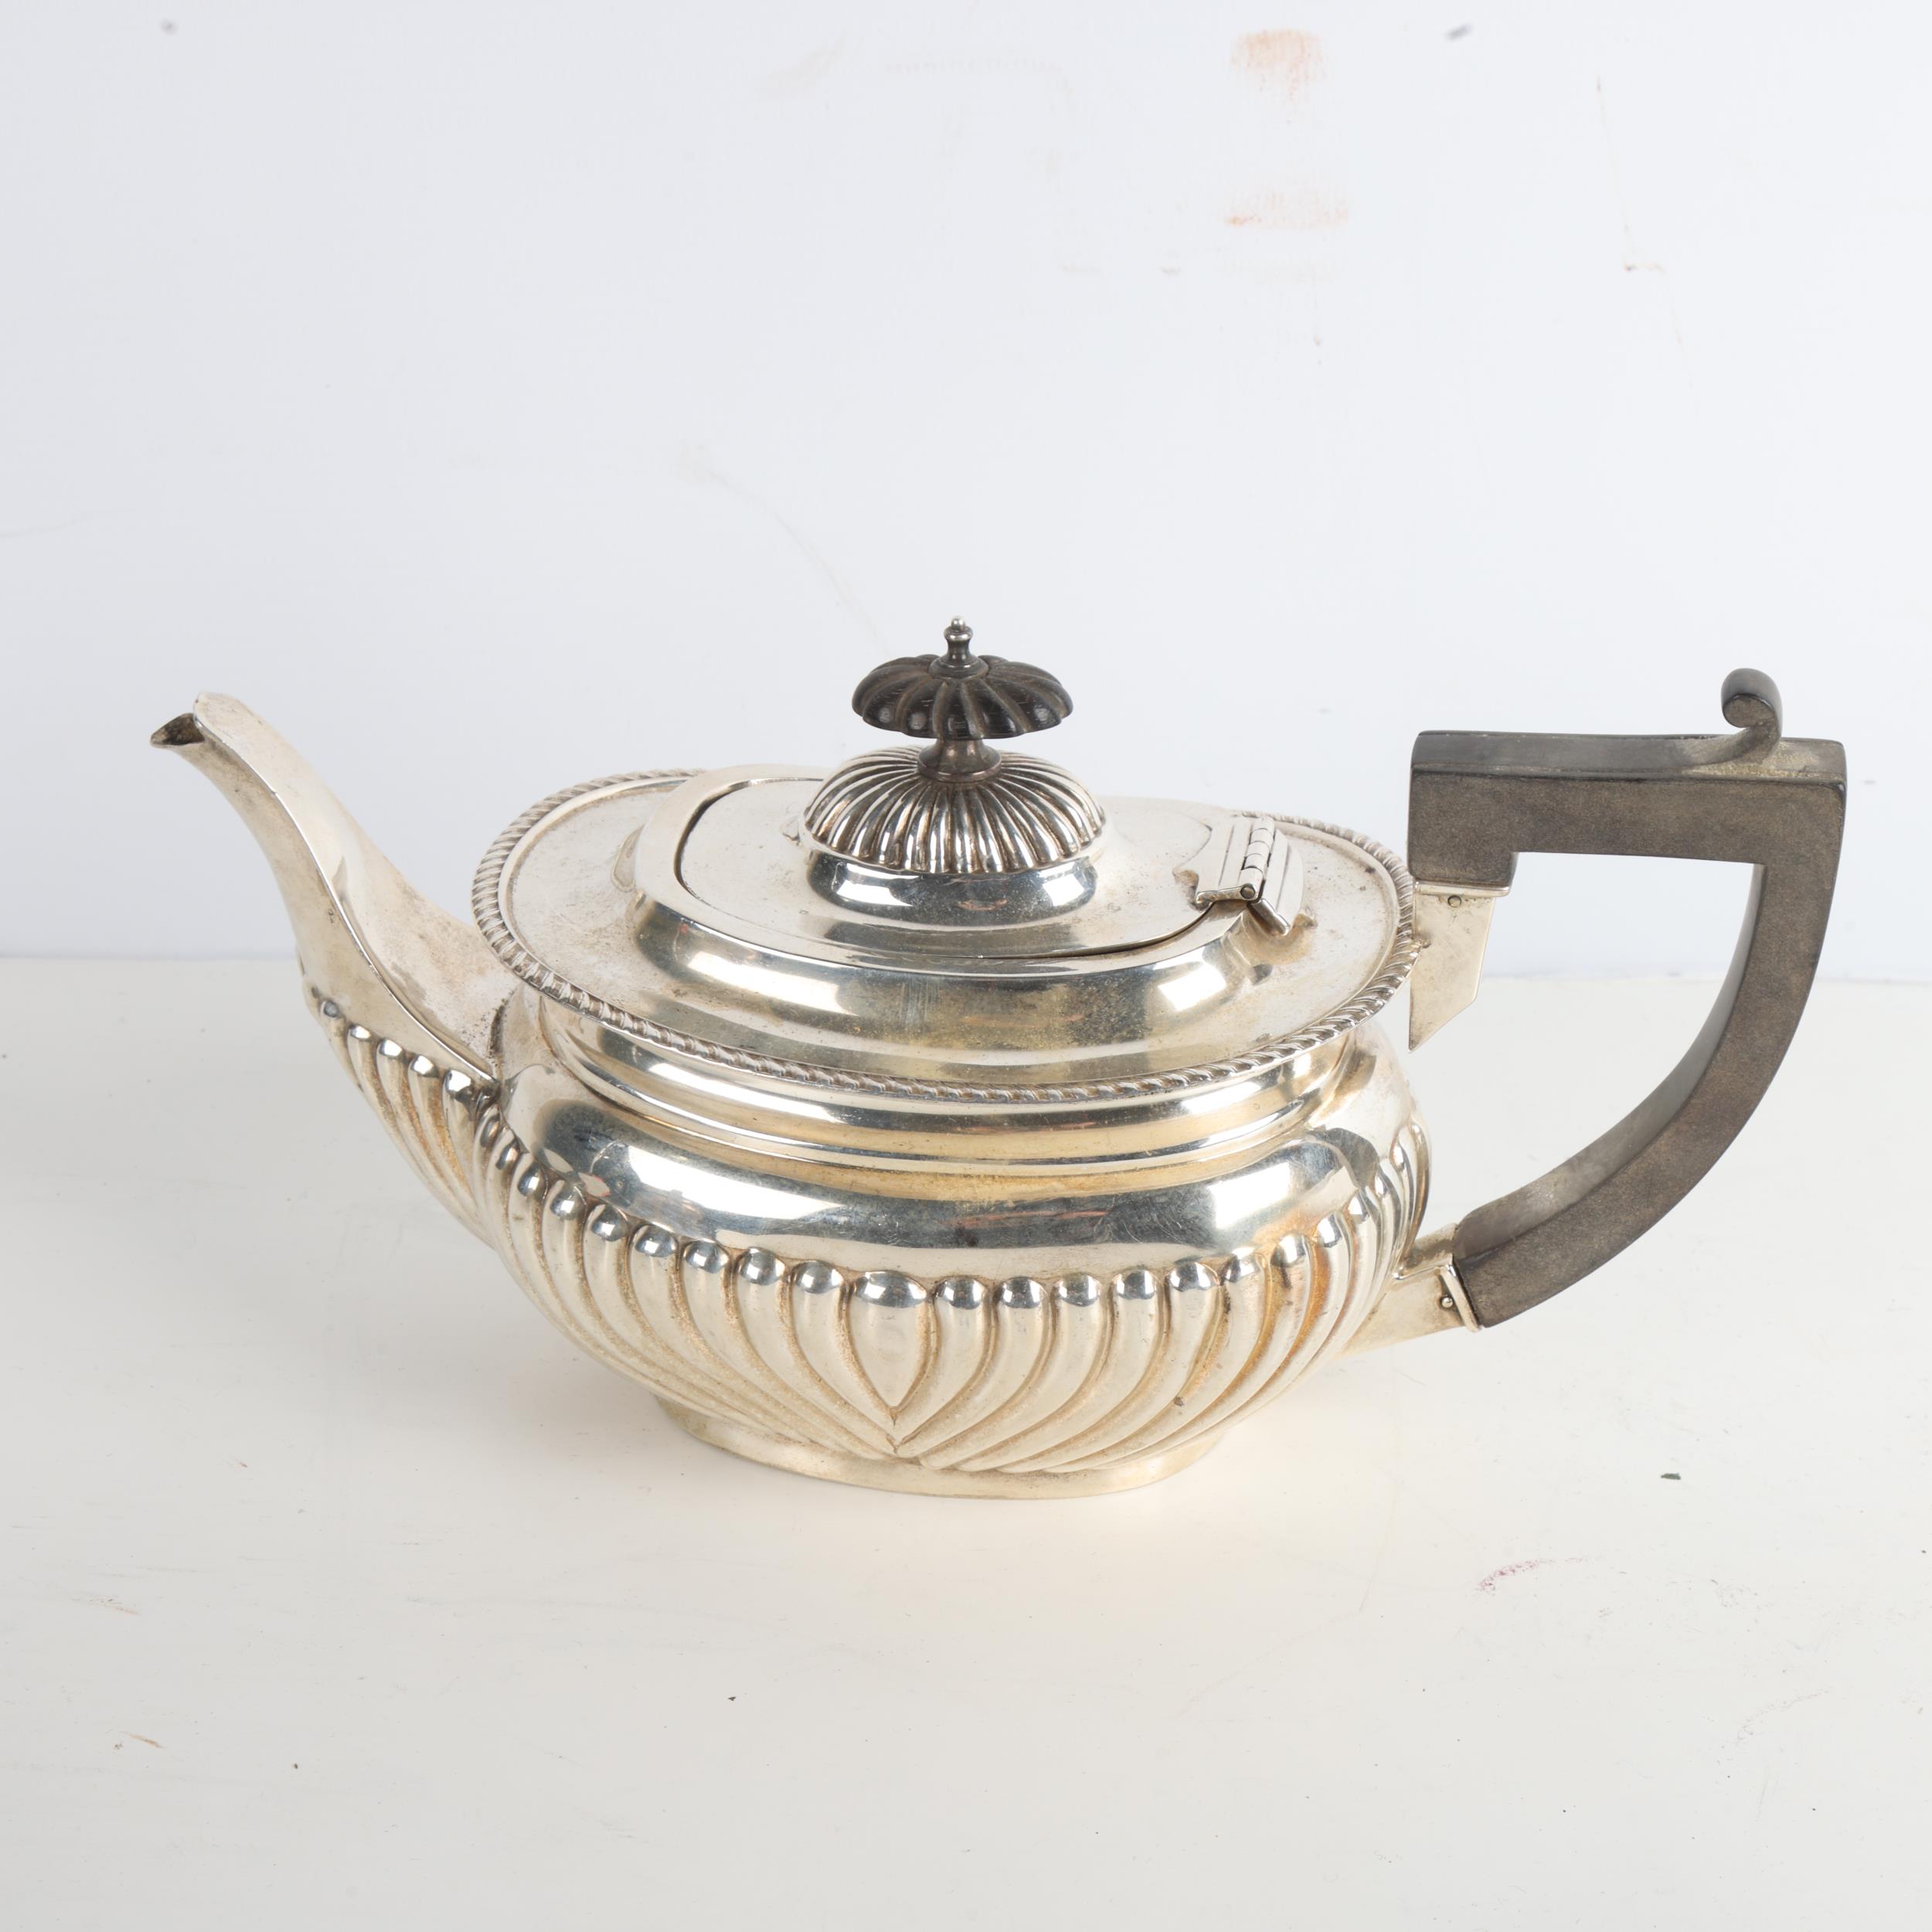 An Edwardian silver bachelor's teapot, William Aitken, Birmingham 1902, oval bulbous form with - Image 2 of 3